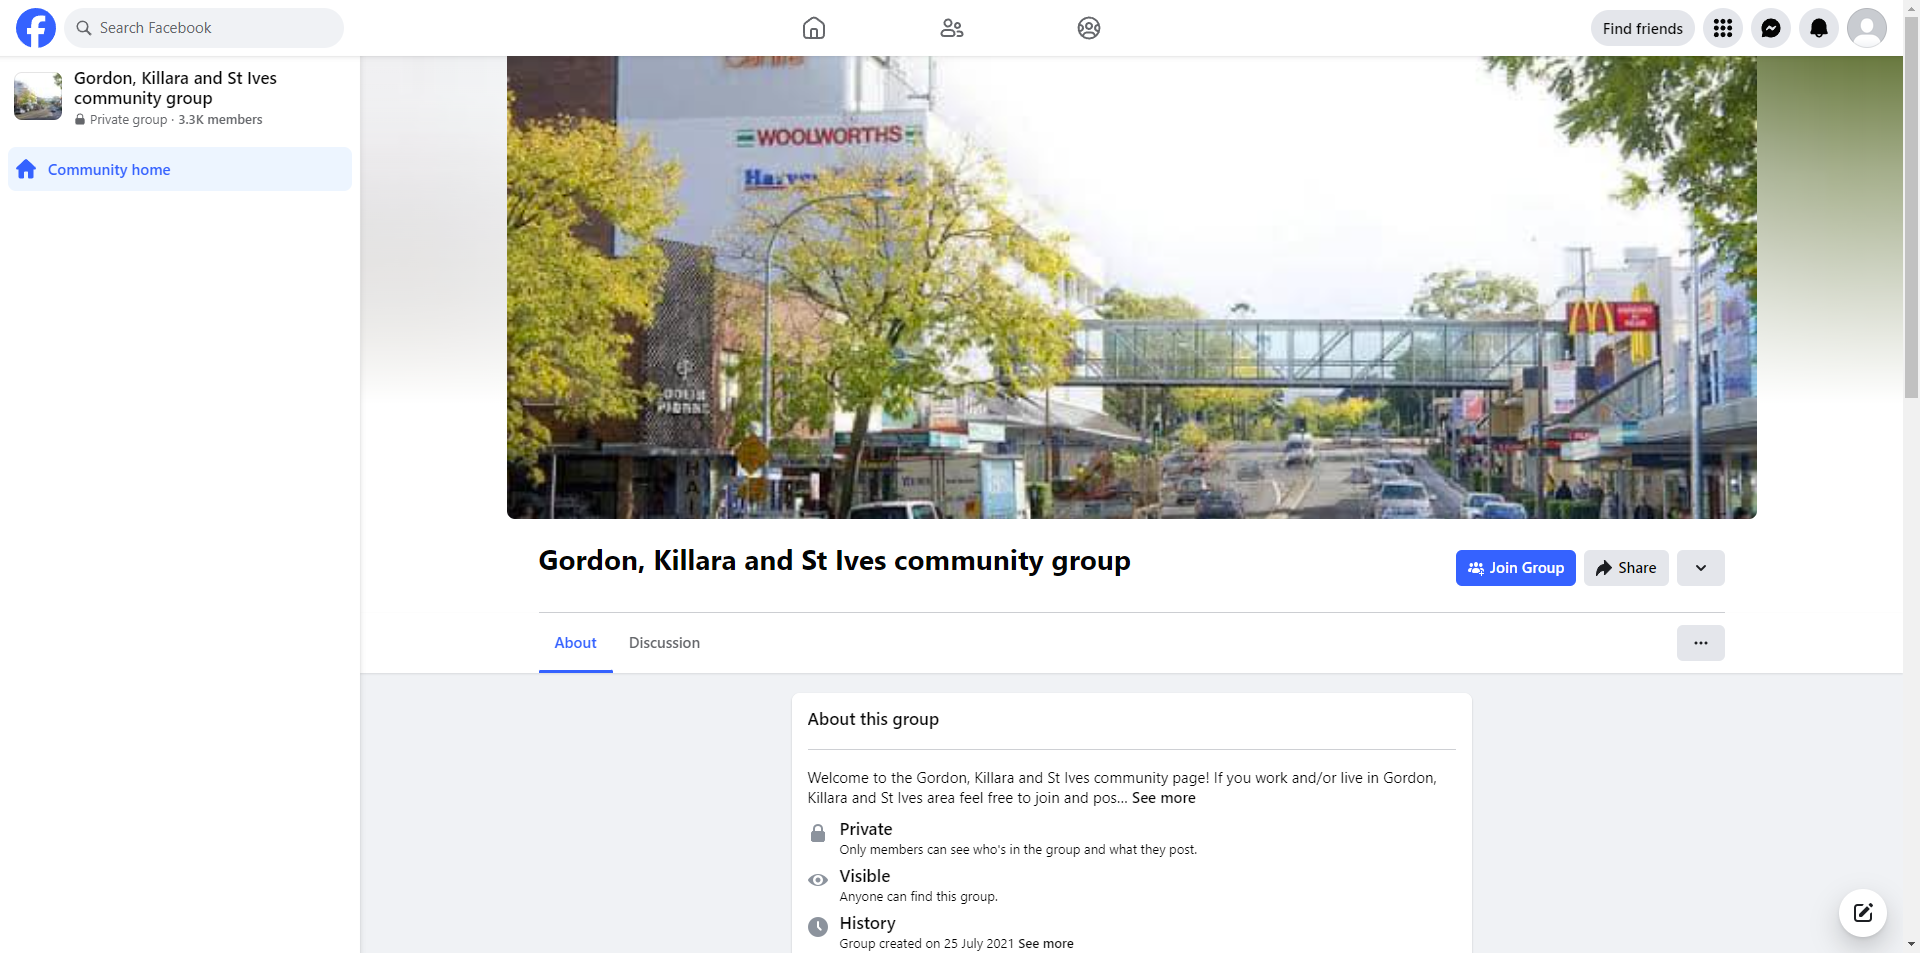 Gordon, Killara and St Ives Community Group